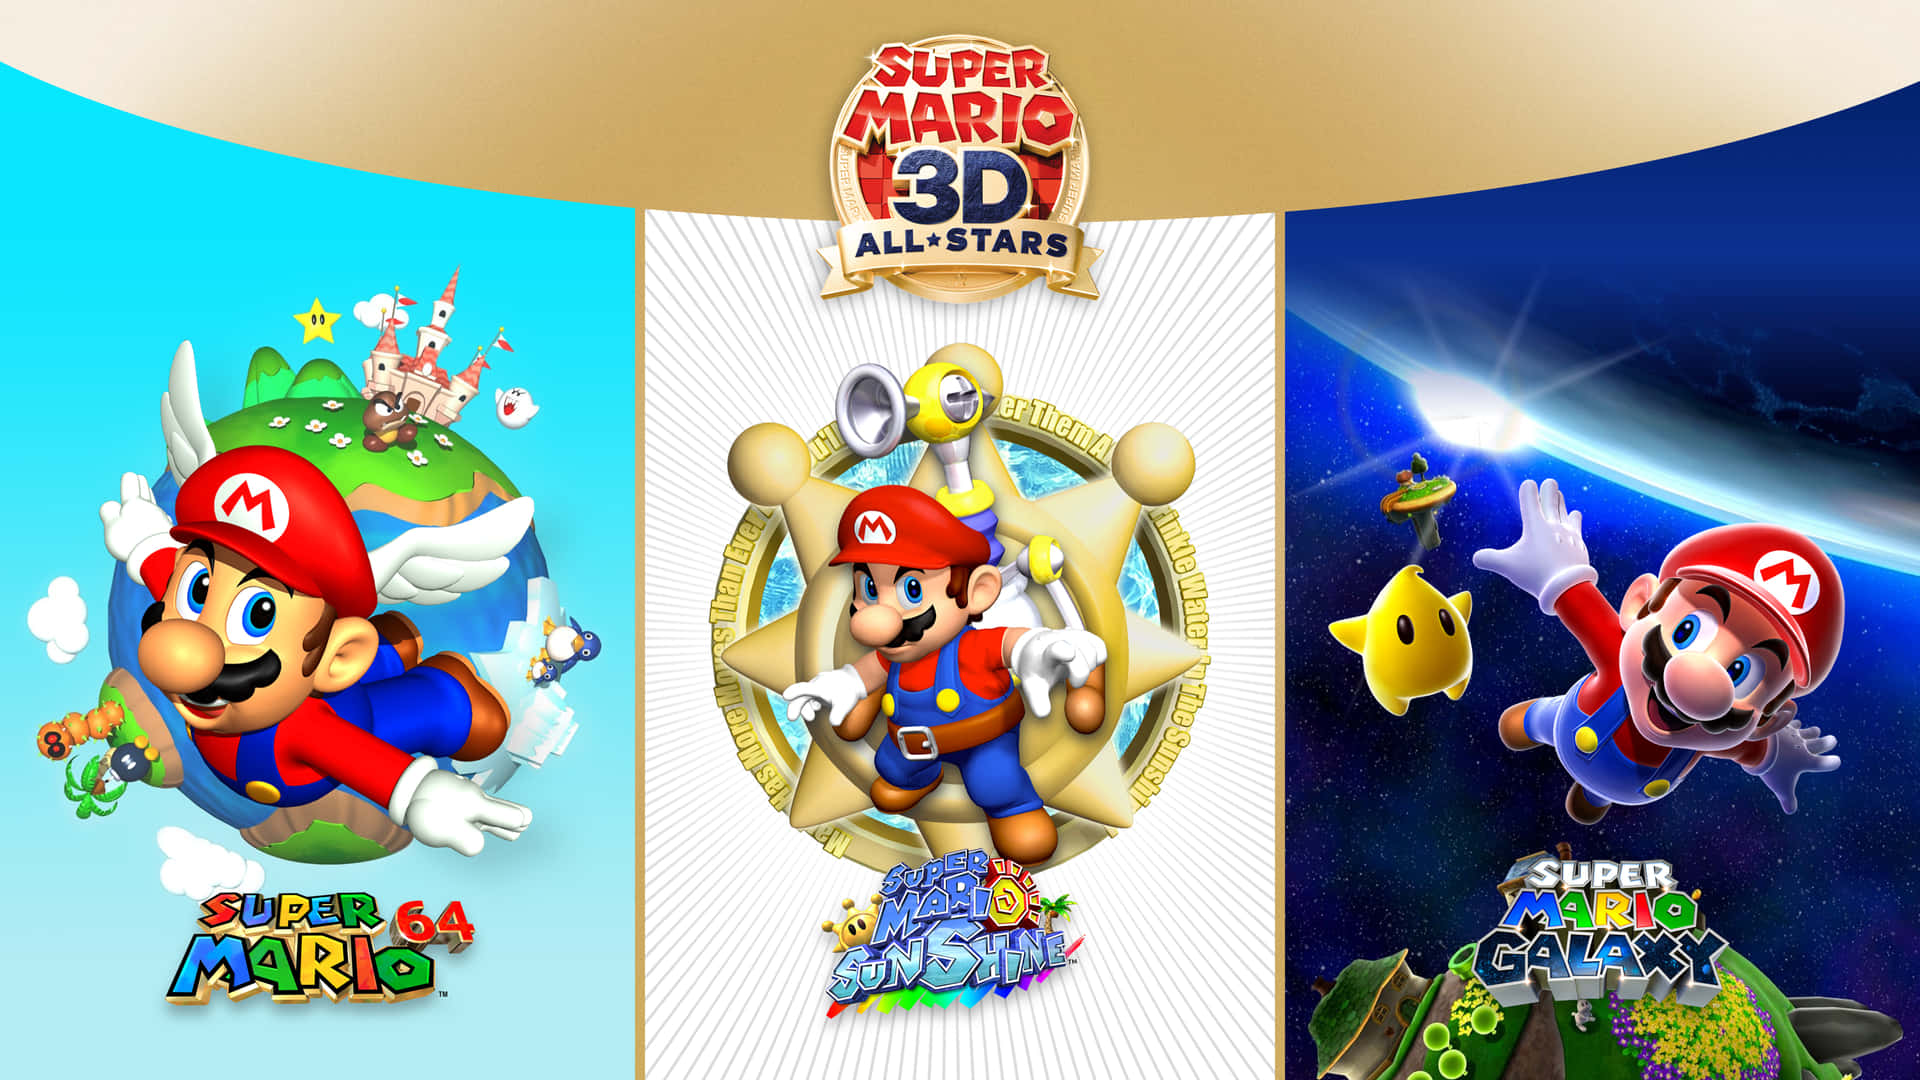 Mario hopper til nye højder i Super Mario 3D Verden Wallpaper